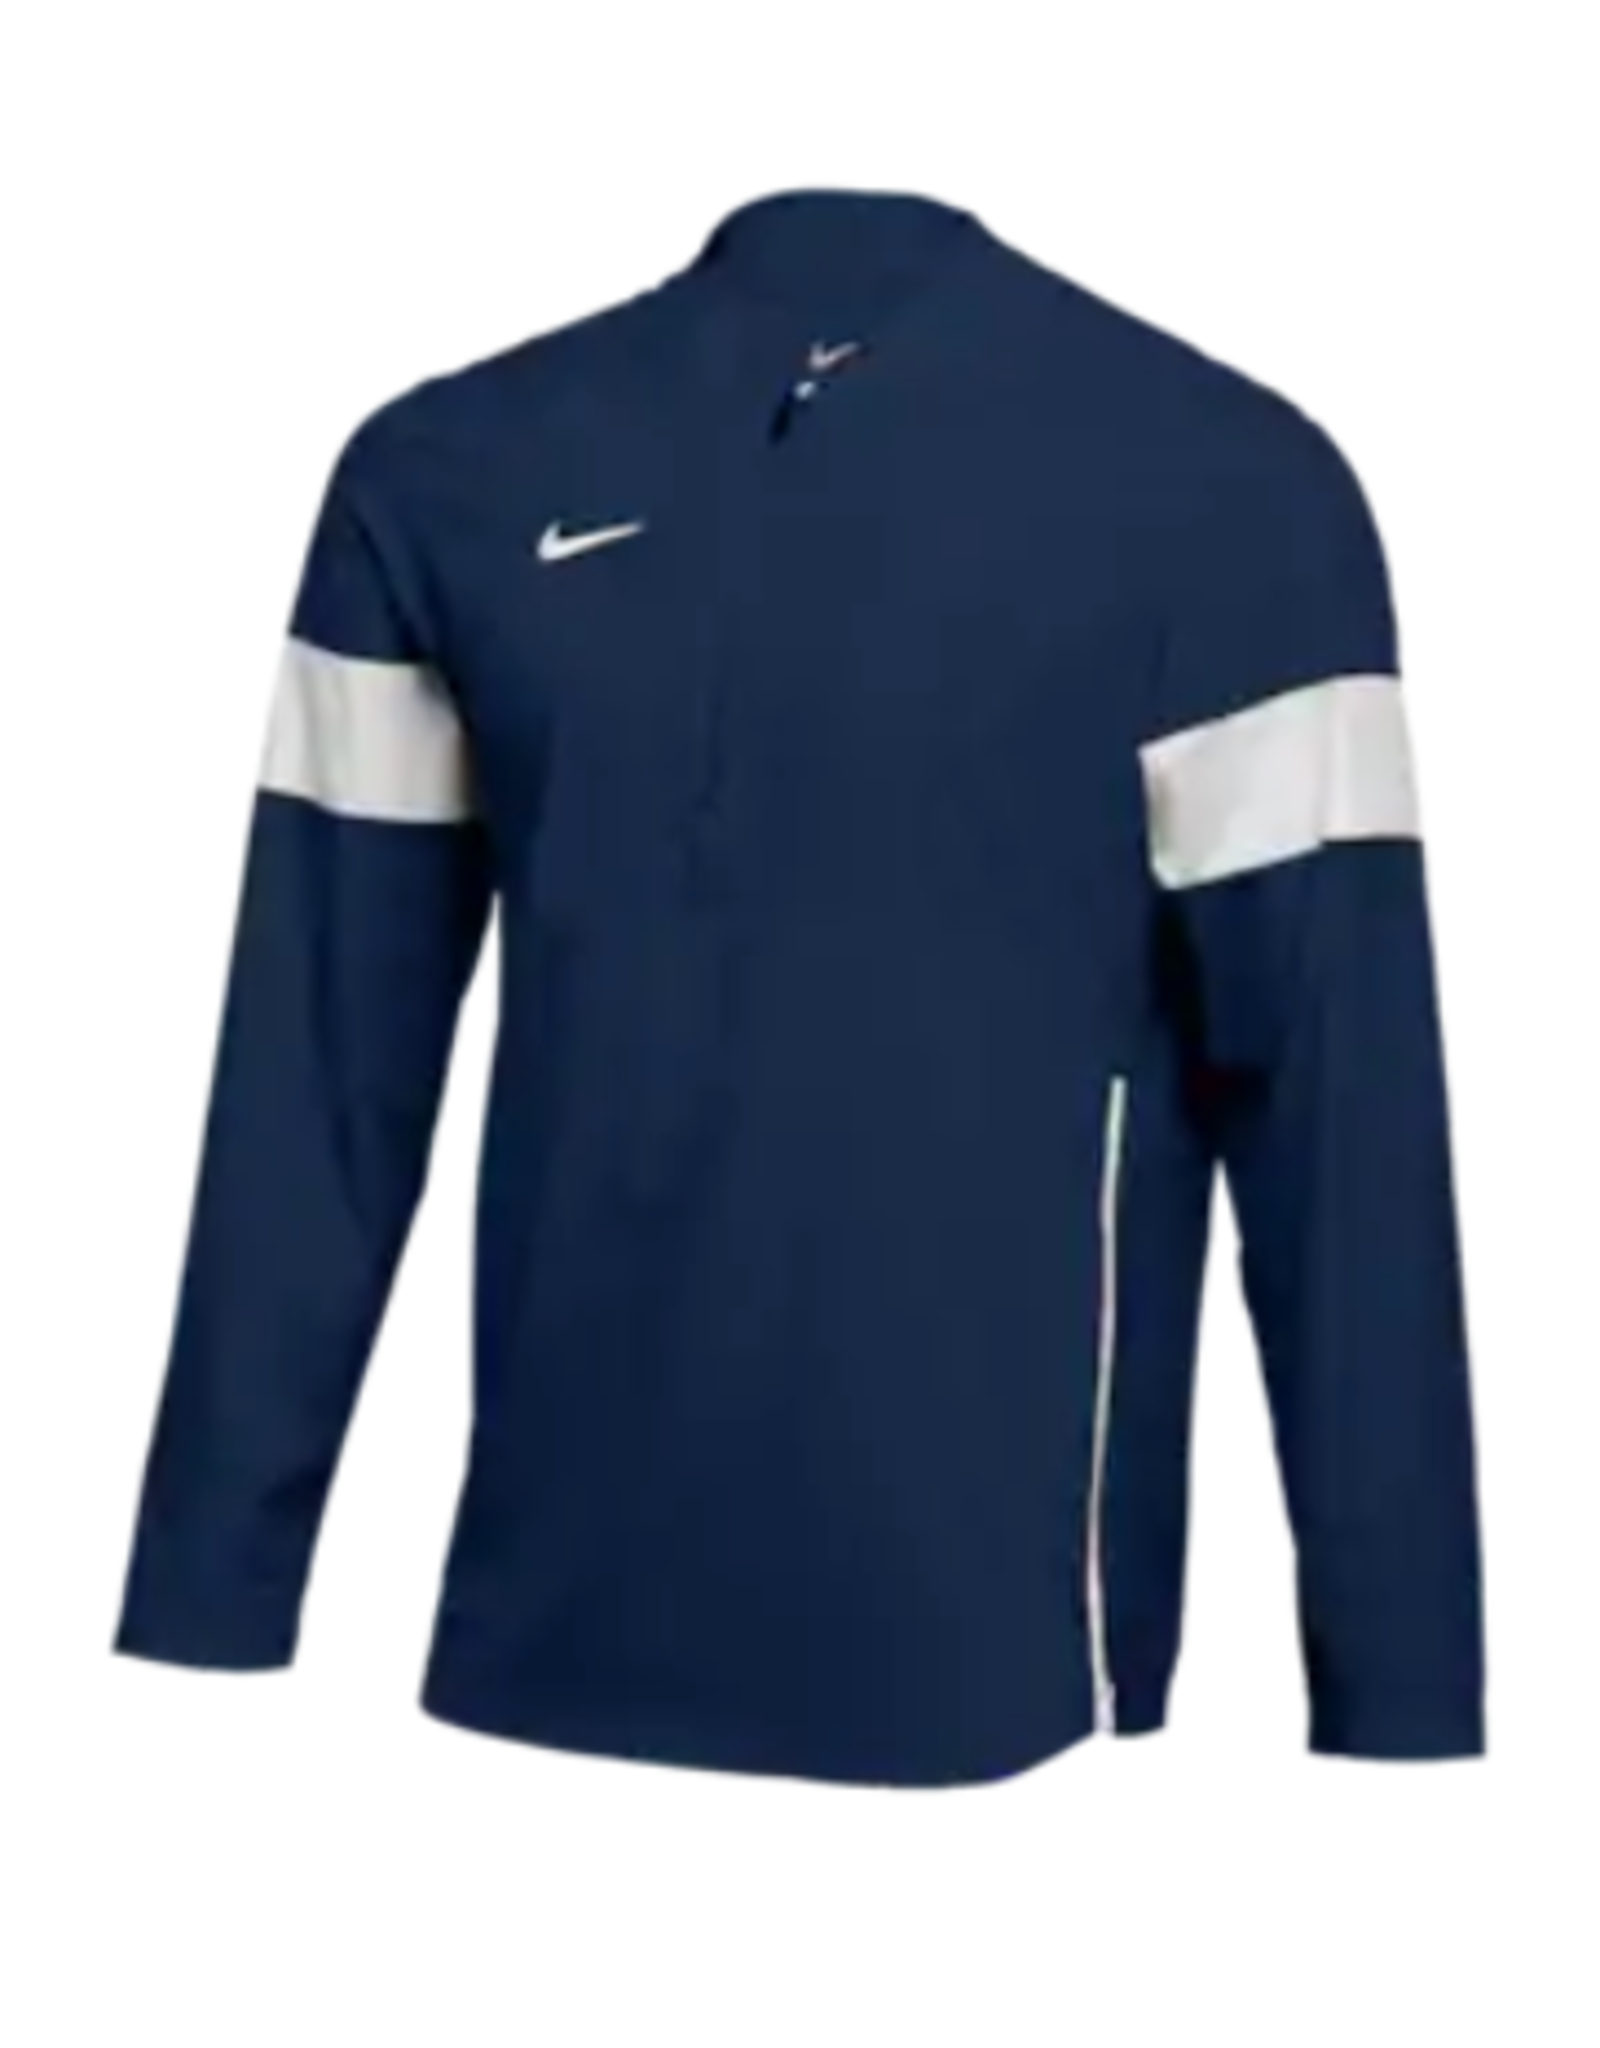 NON-UNIFORM JD Nike Team Authentic Lightweight 1/2 Zip Jacket